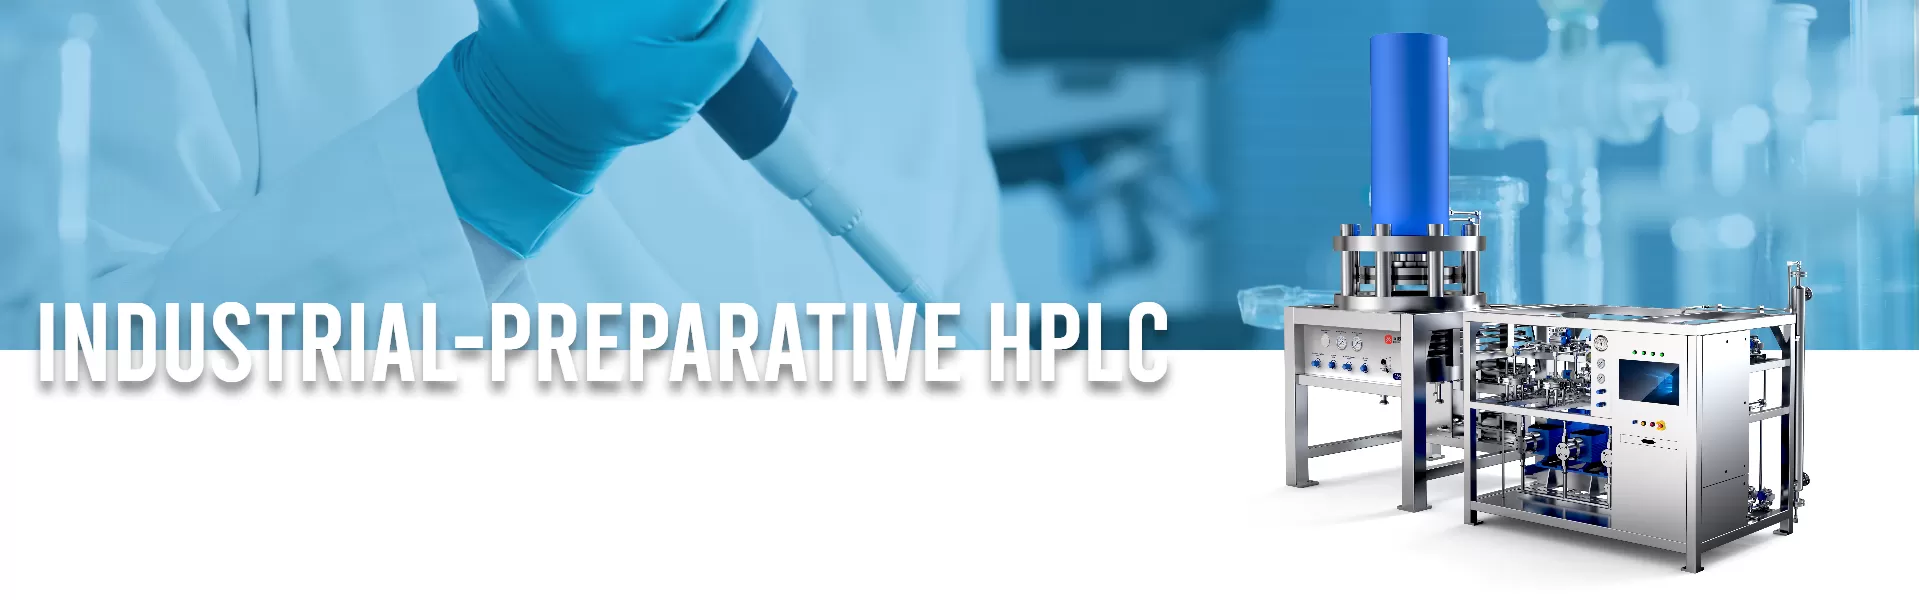 Industrial-Preparative HPLC